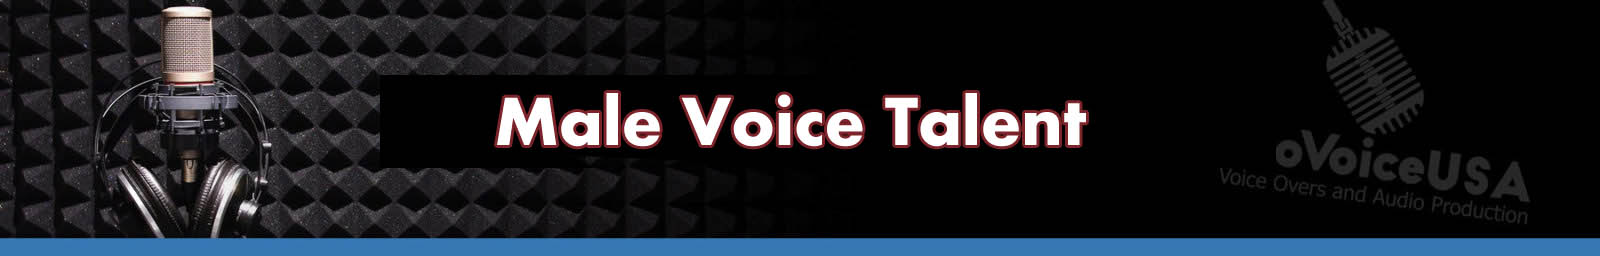 Male Voice Talent | American Voice Recording Service | ProVoice USA